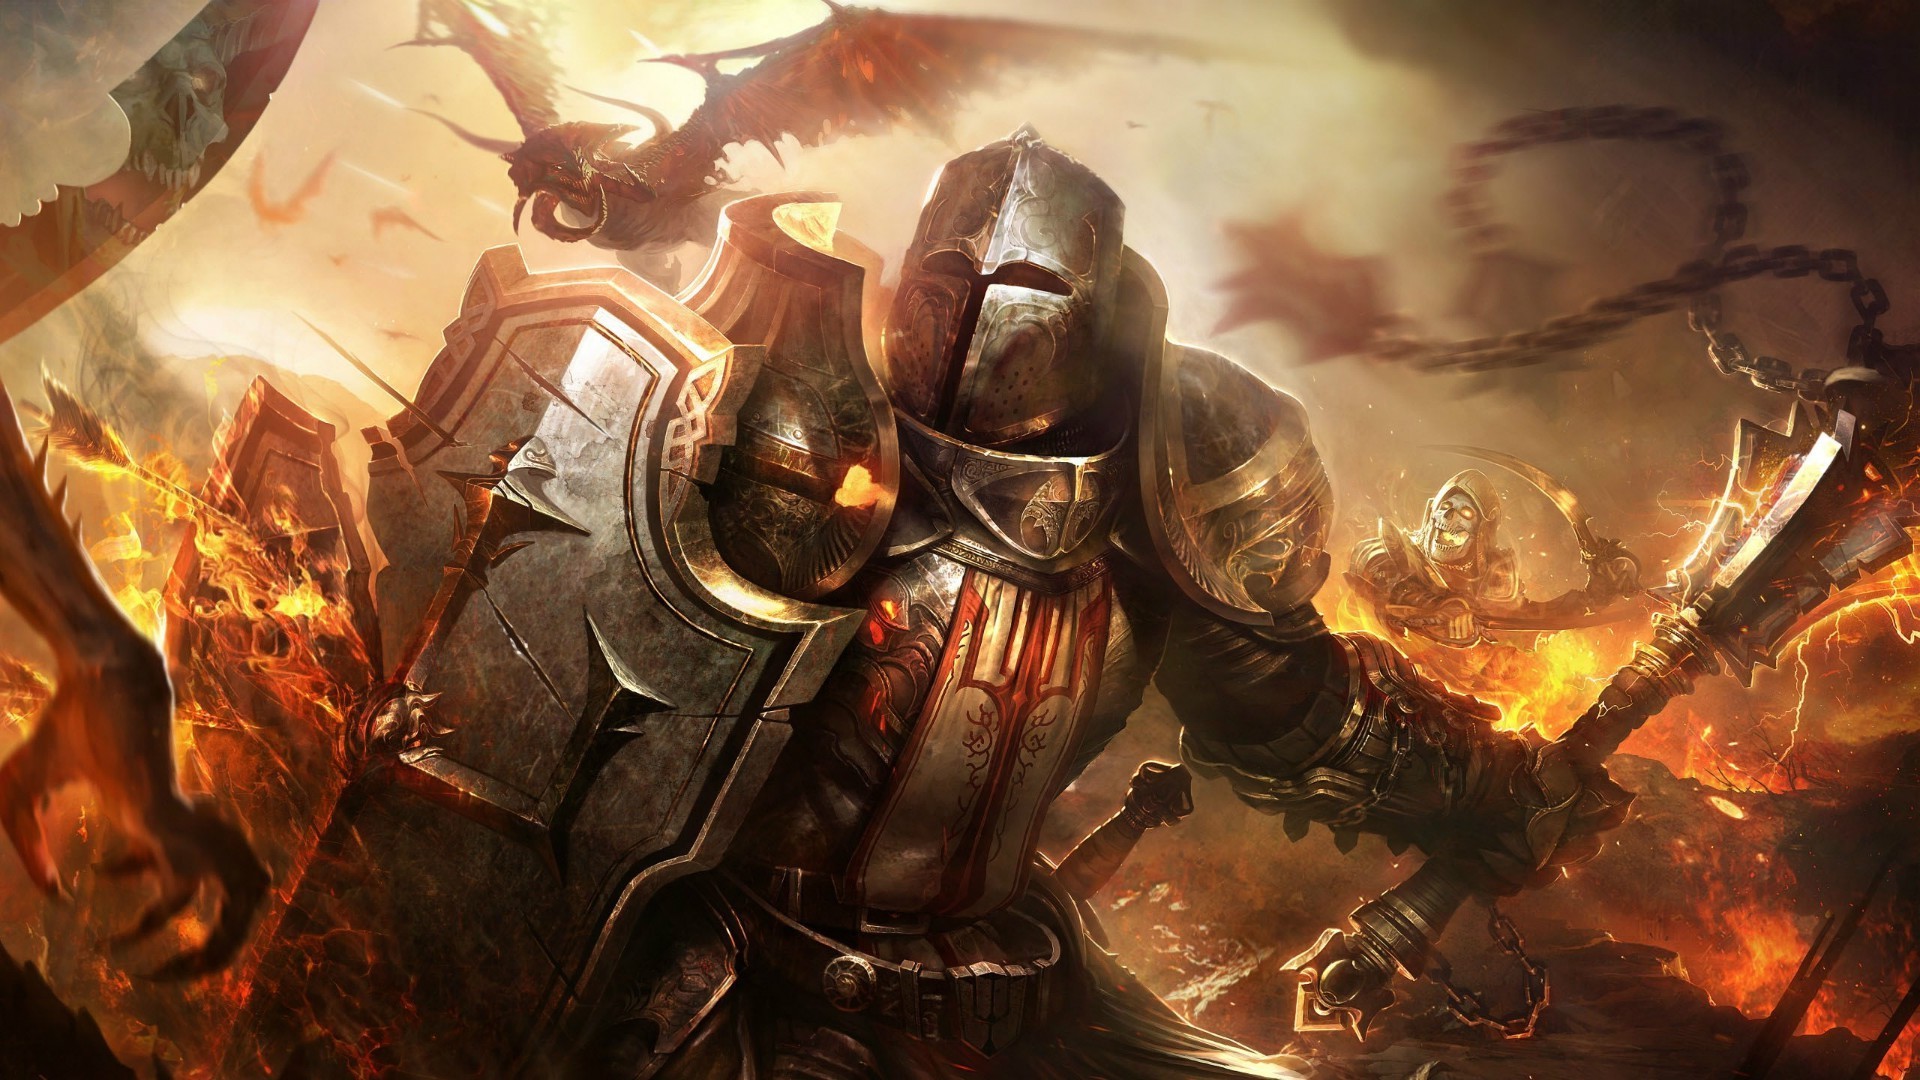 crusader wallpaper,action adventure game,strategy video game,pc game,demon,cg artwork